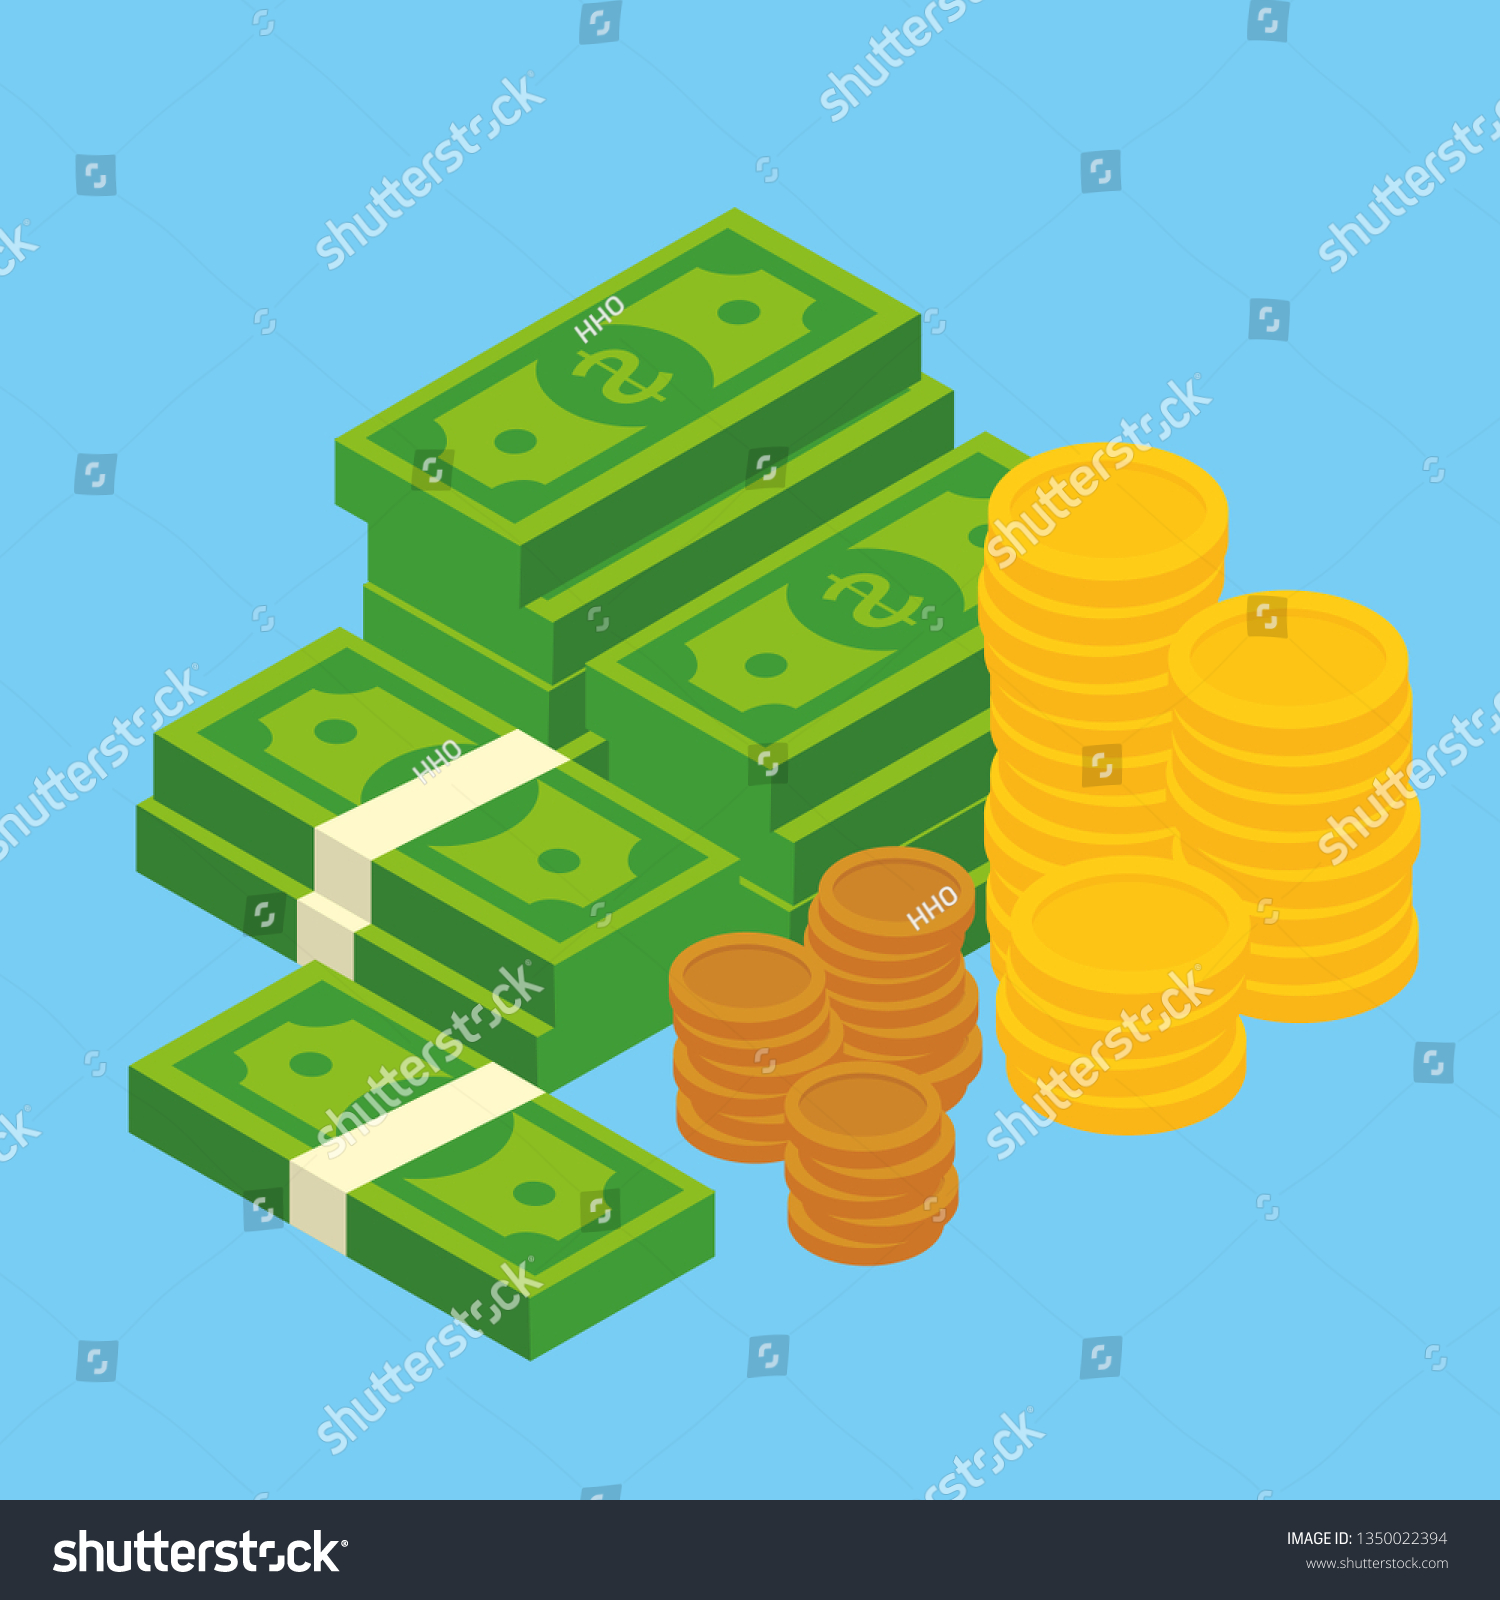 Concept of big money. Big pile of cash. #1350022394